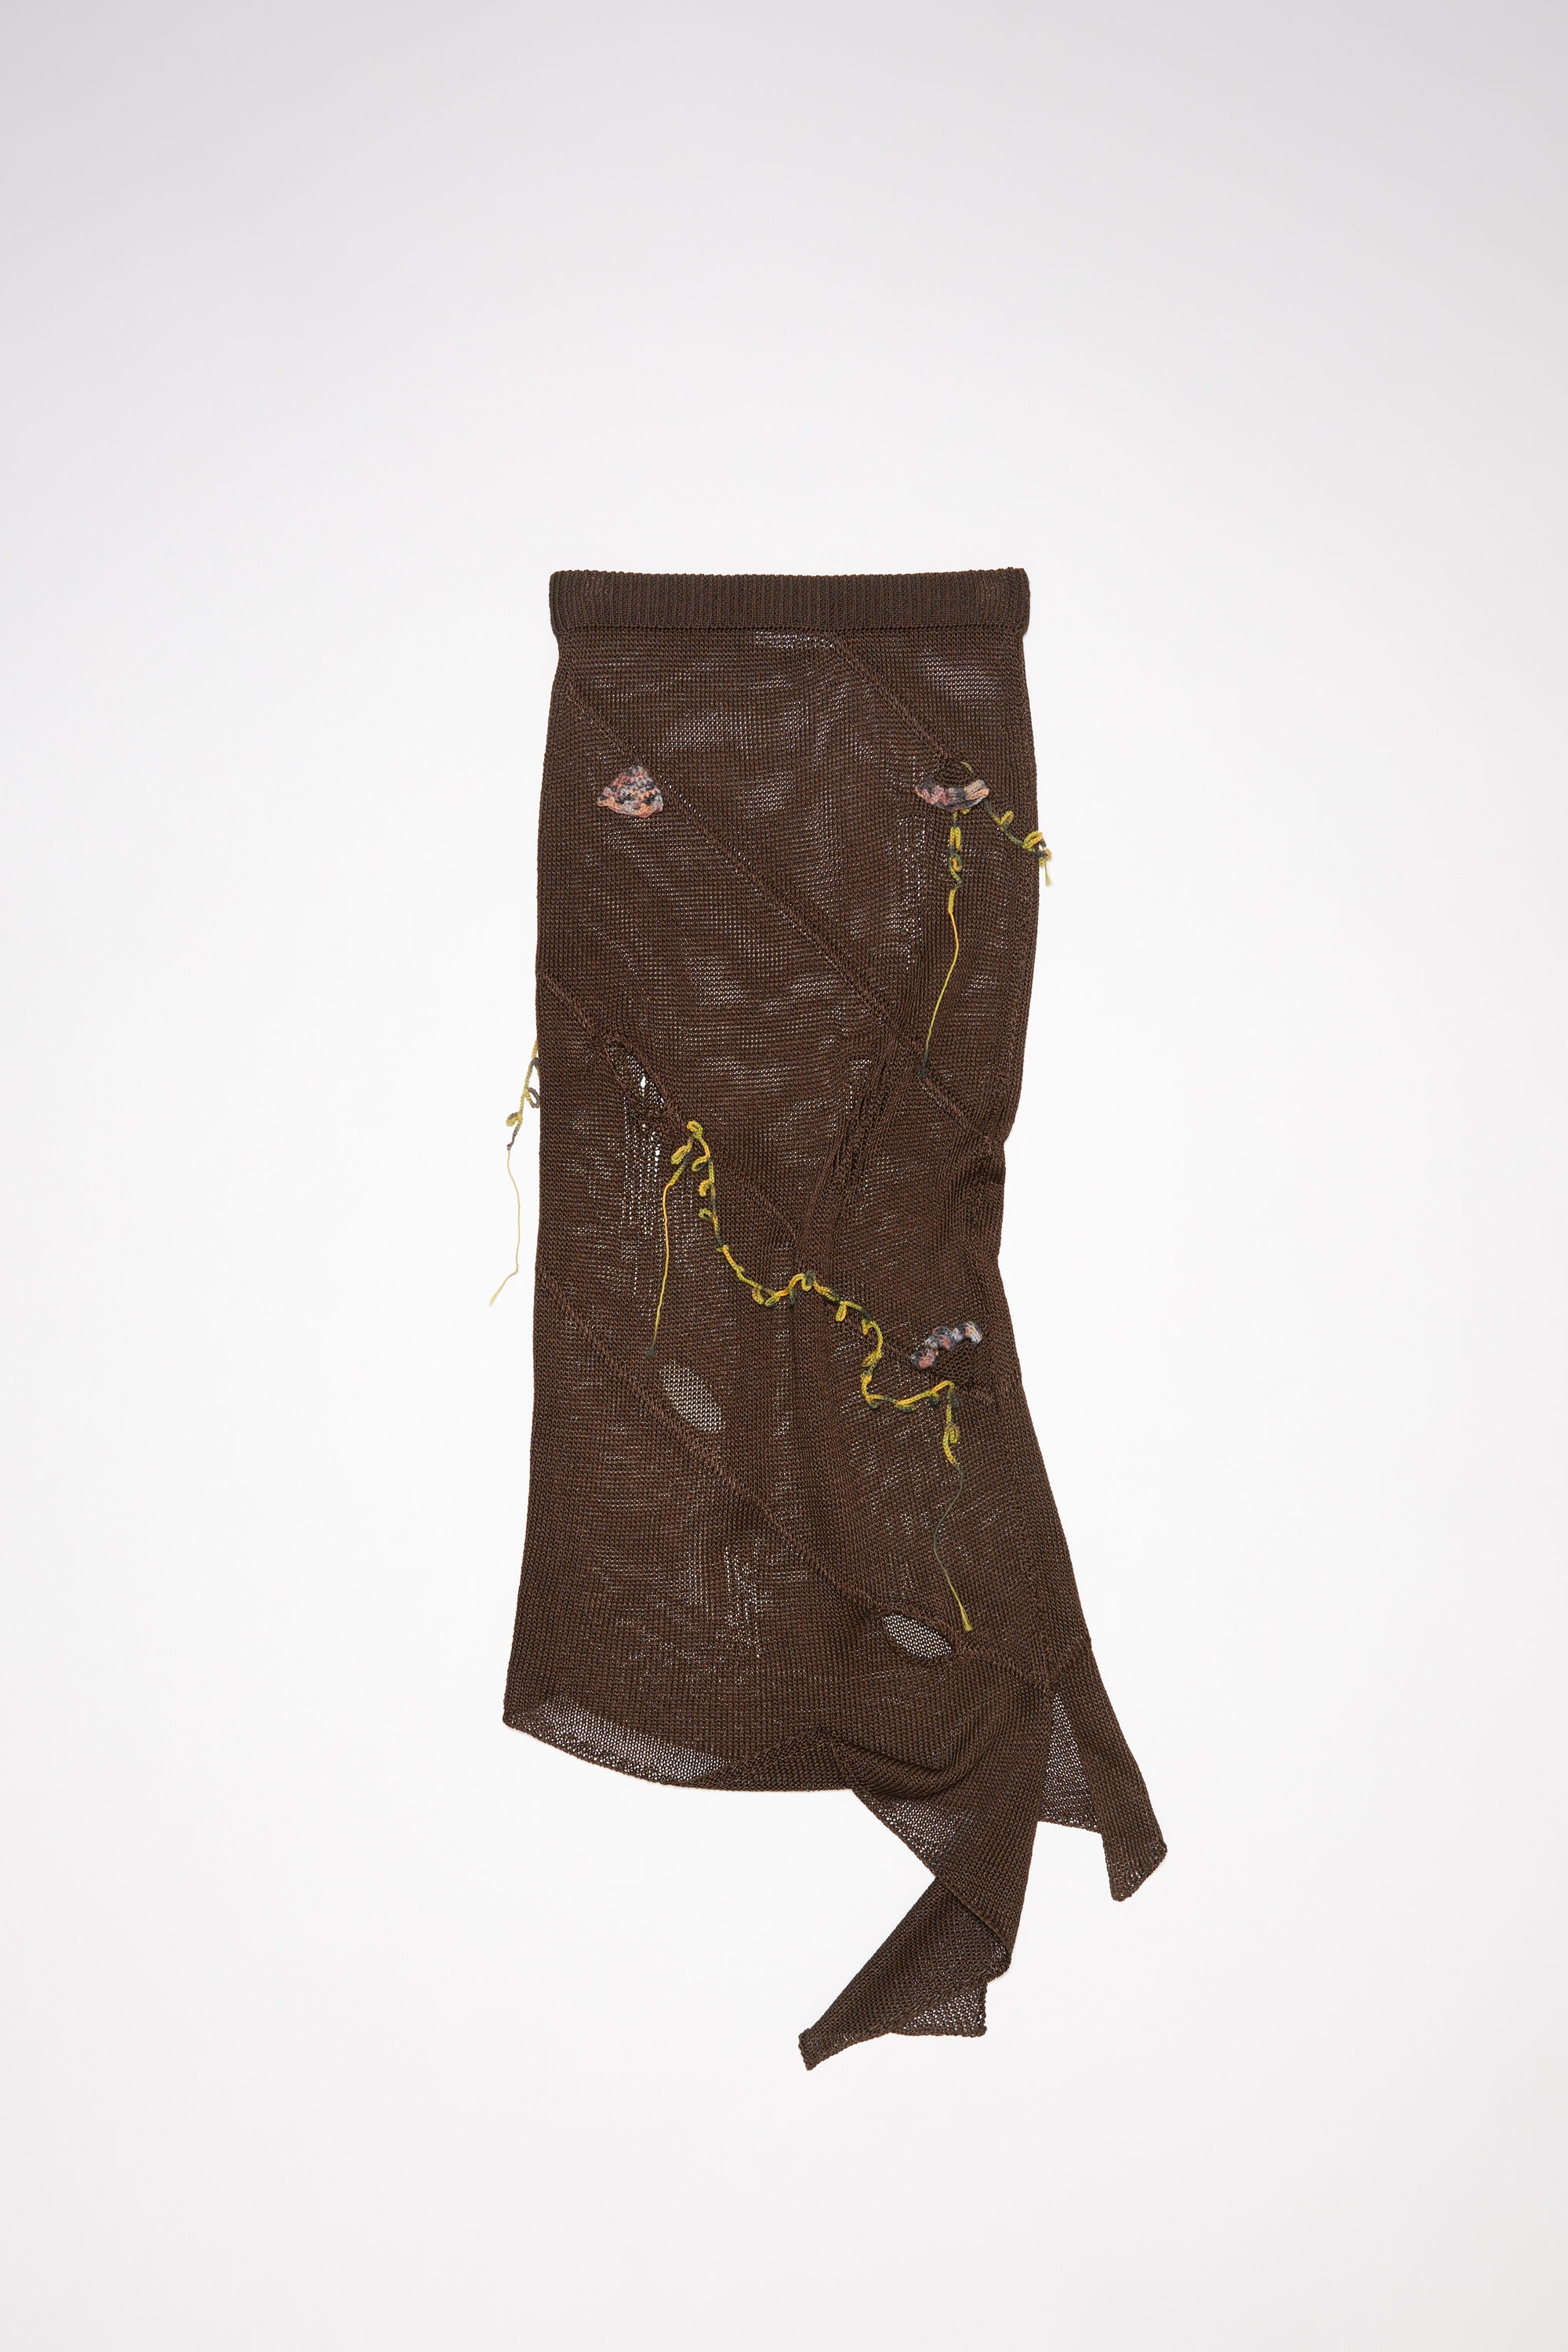 Crochet flower skirt - Chocolate brown - 1